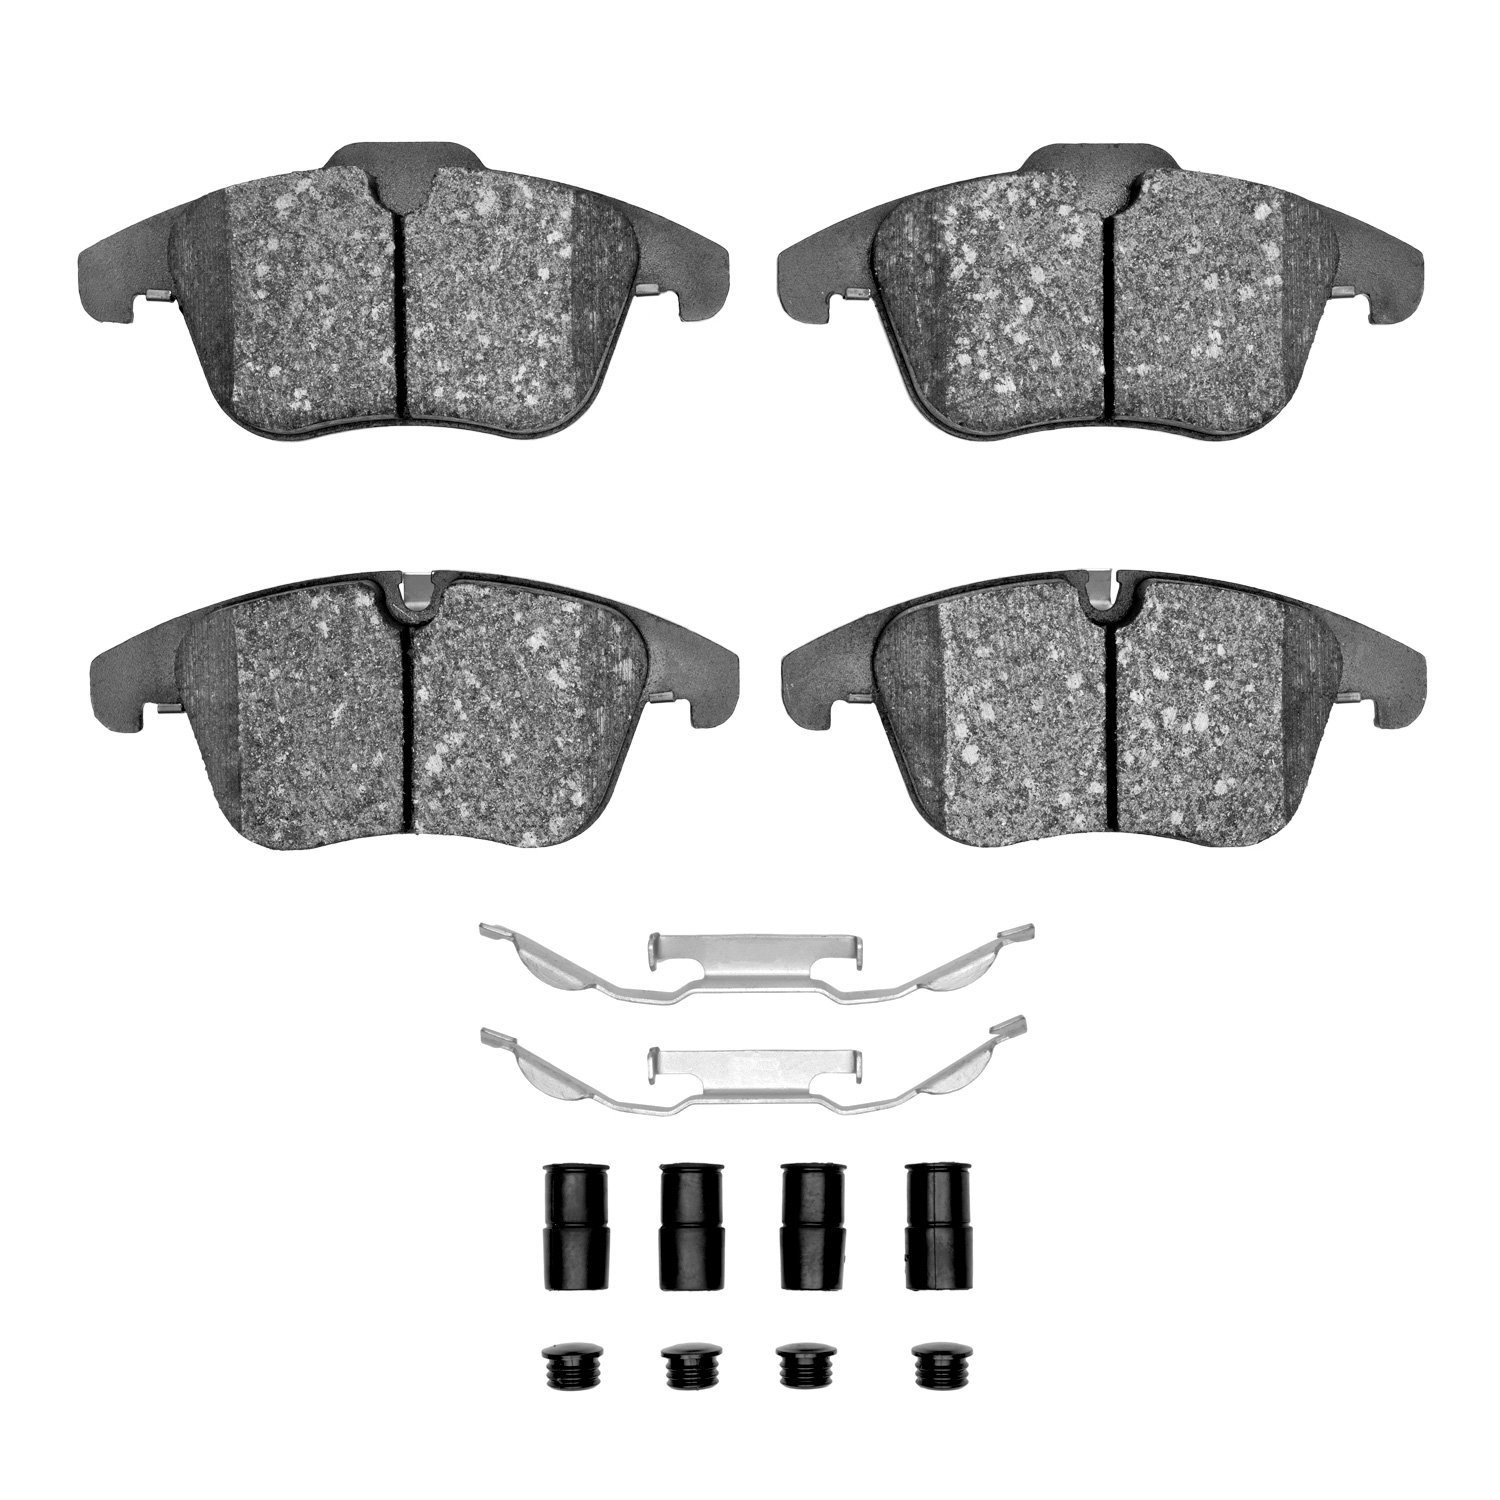 1600-1241-01 5000 Euro Ceramic Brake Pads & Hardware Kit, 2006-2018 Multiple Makes/Models, Position: Front